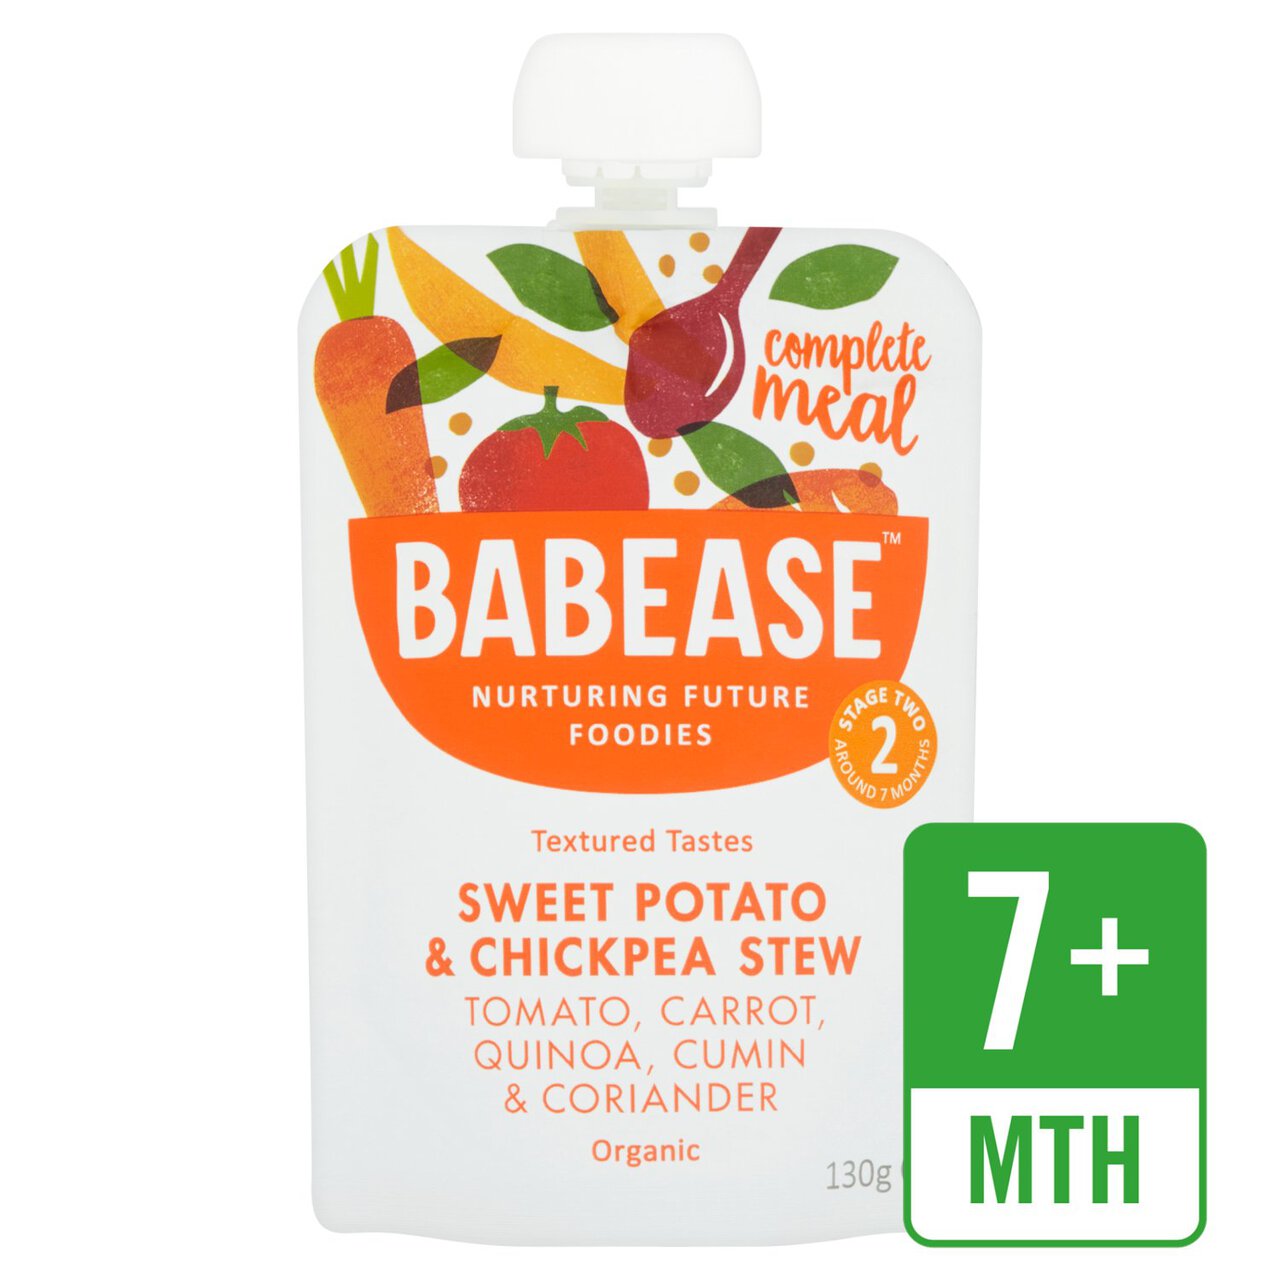 Babease Organic Sweet Potato & Chickpea Stew Pouch, 7 mths+ 130g